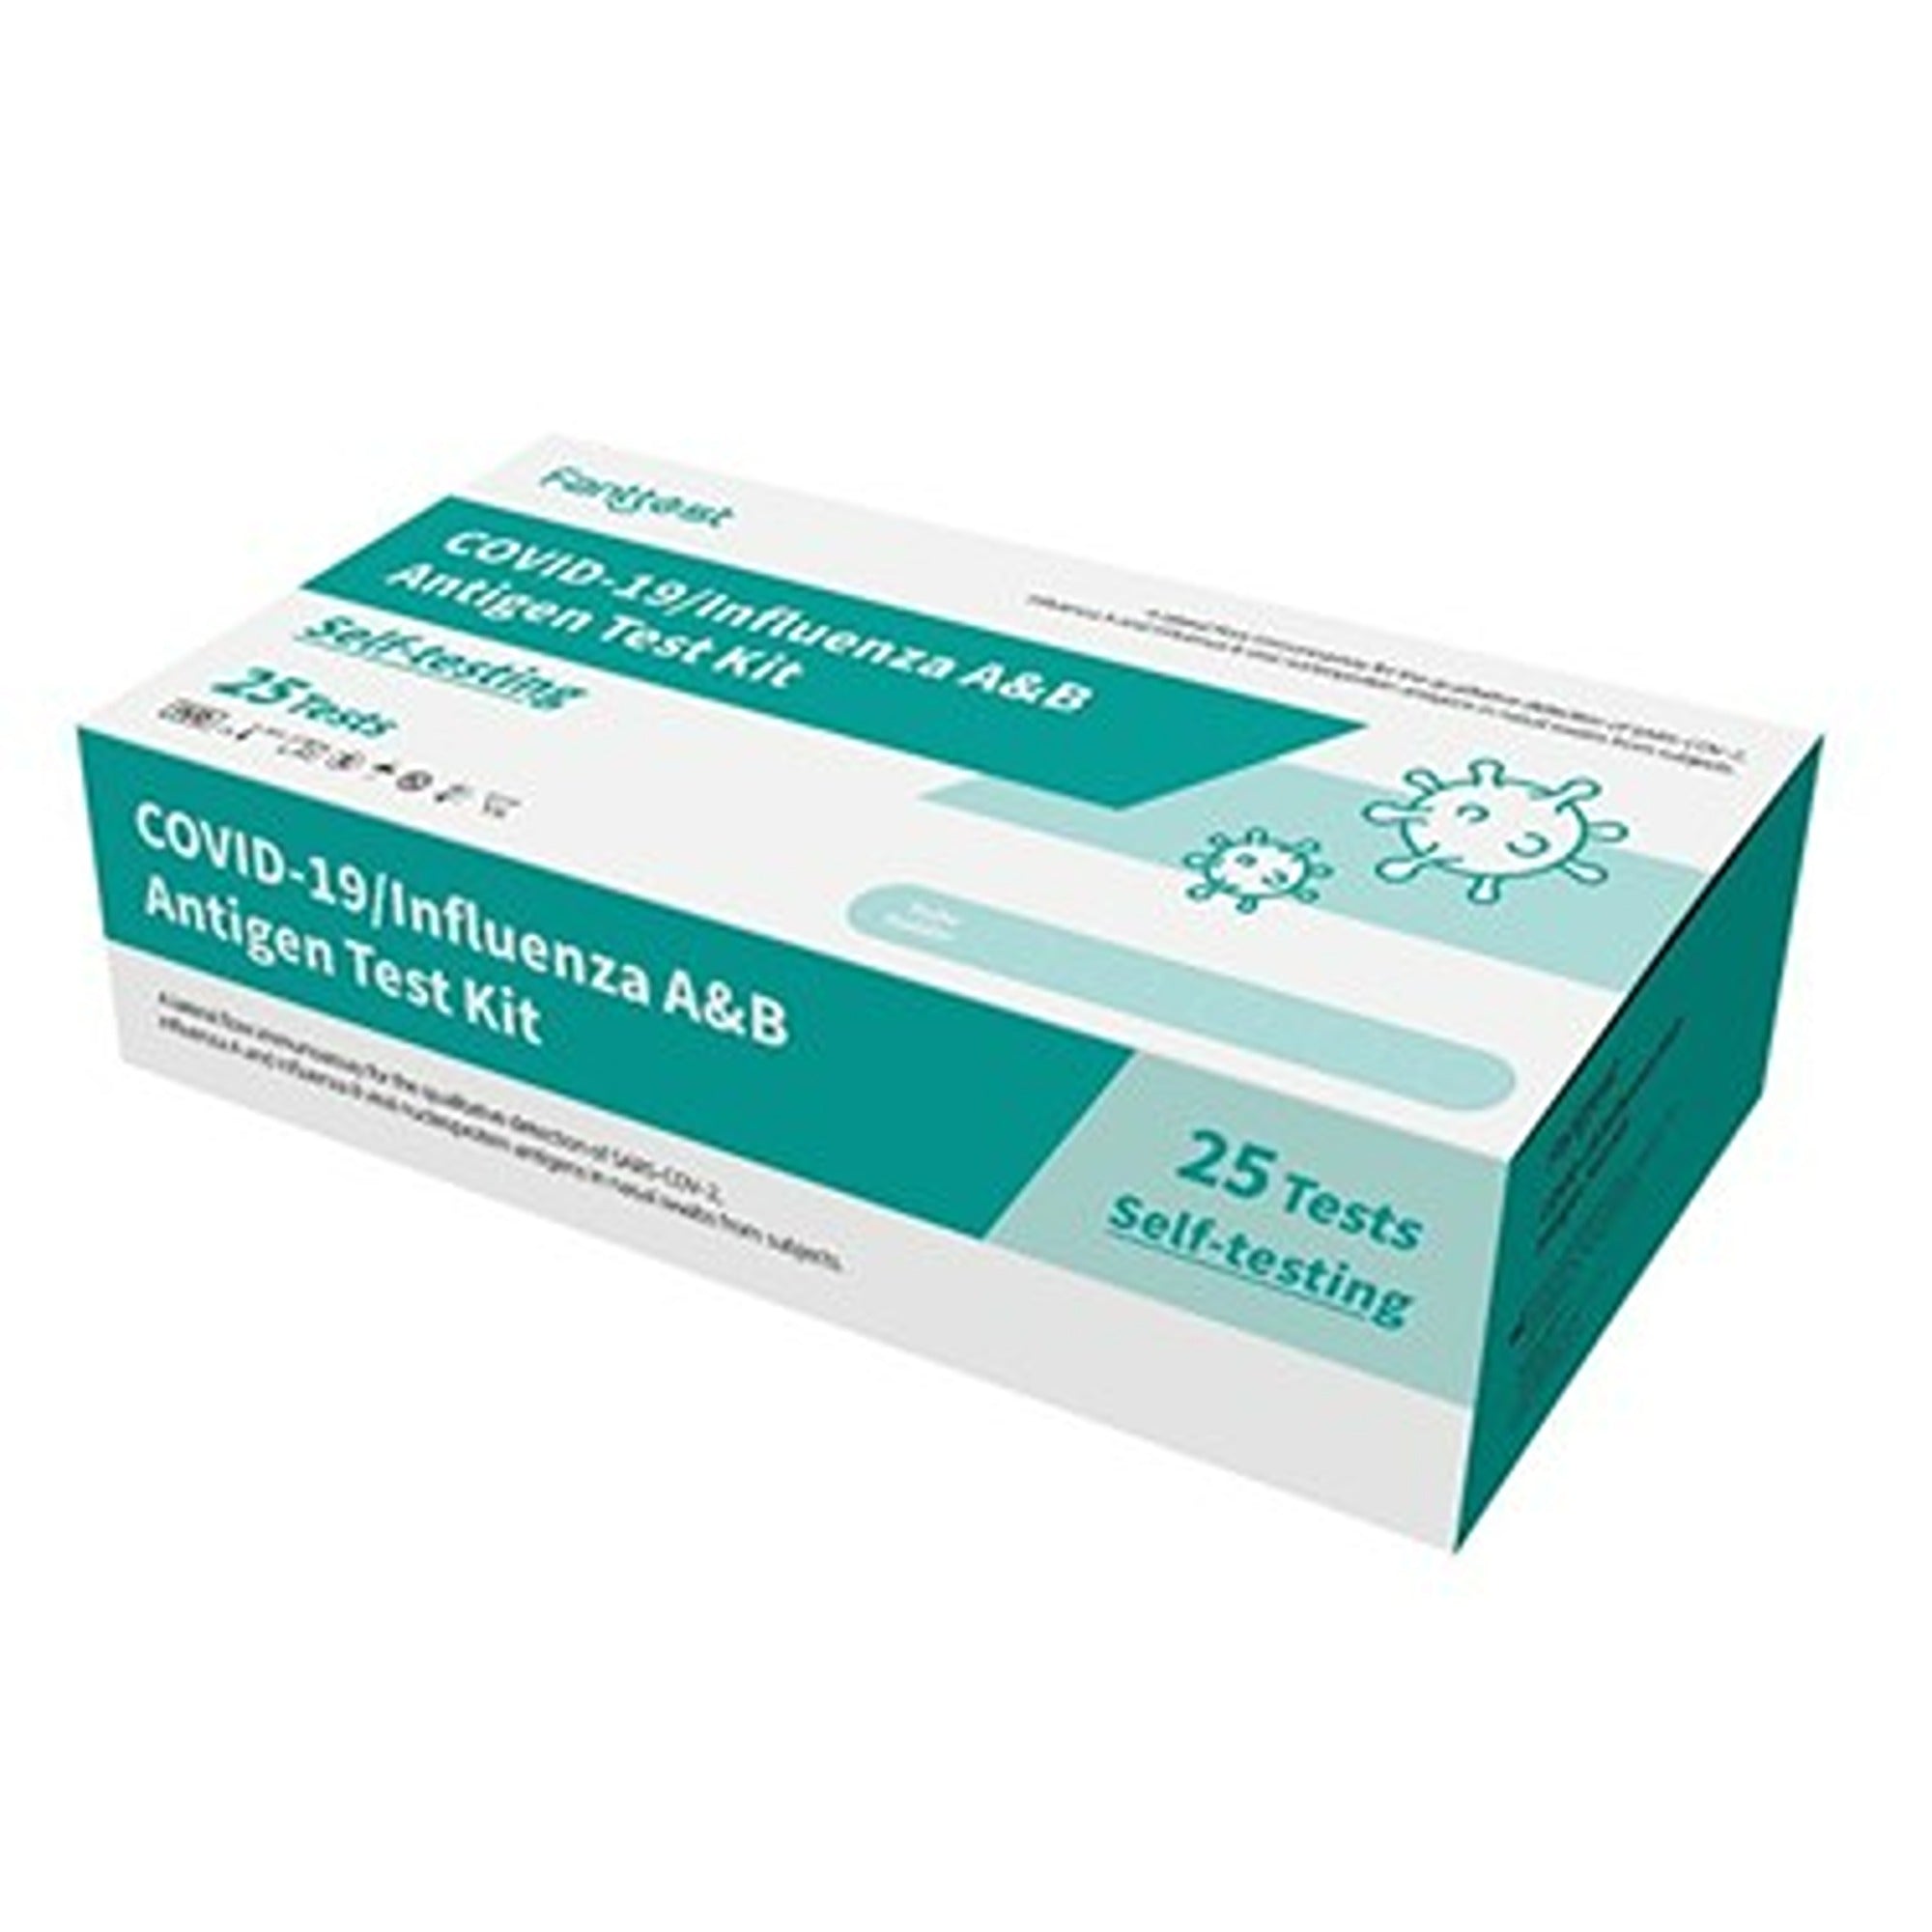 Fanttest COVID-19/Influenza A&B Antigen Test Kit - 25 tests